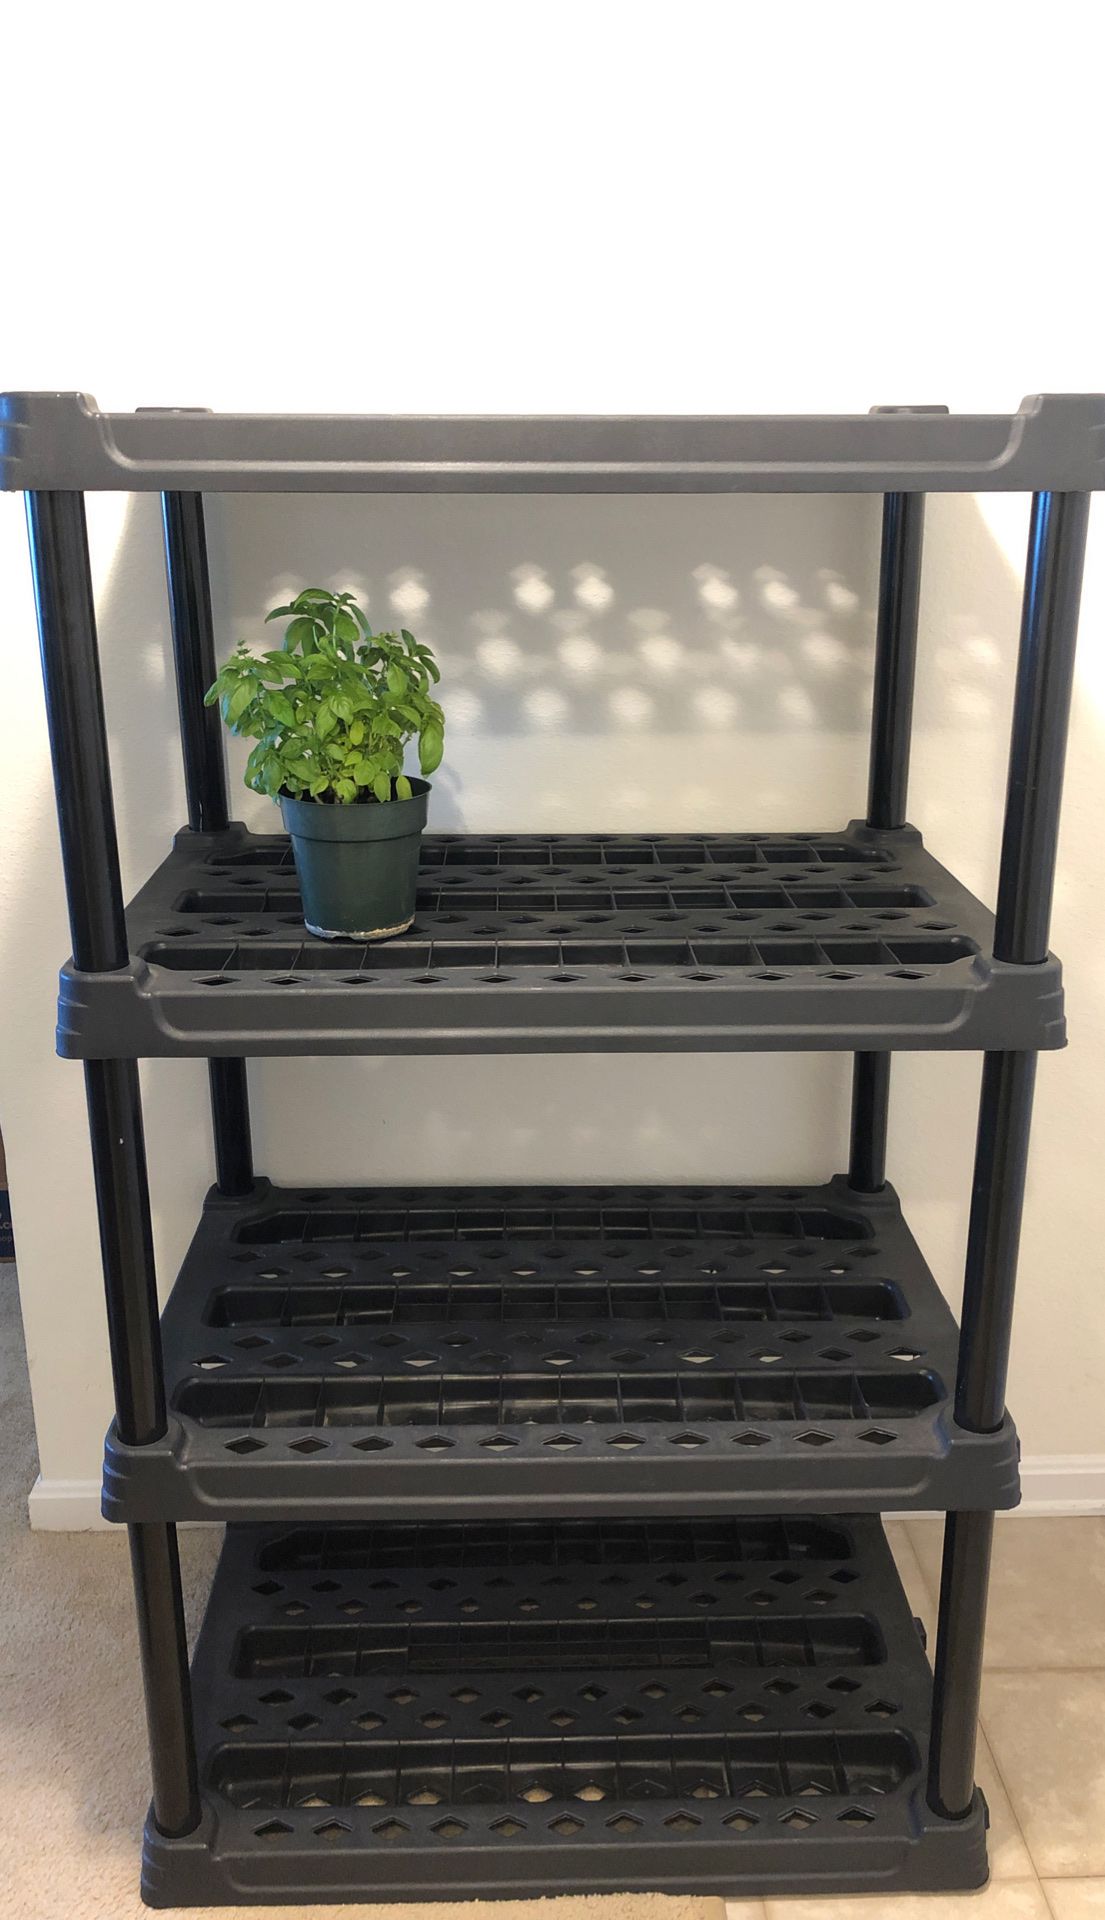 Shelves for garage or apartment storage